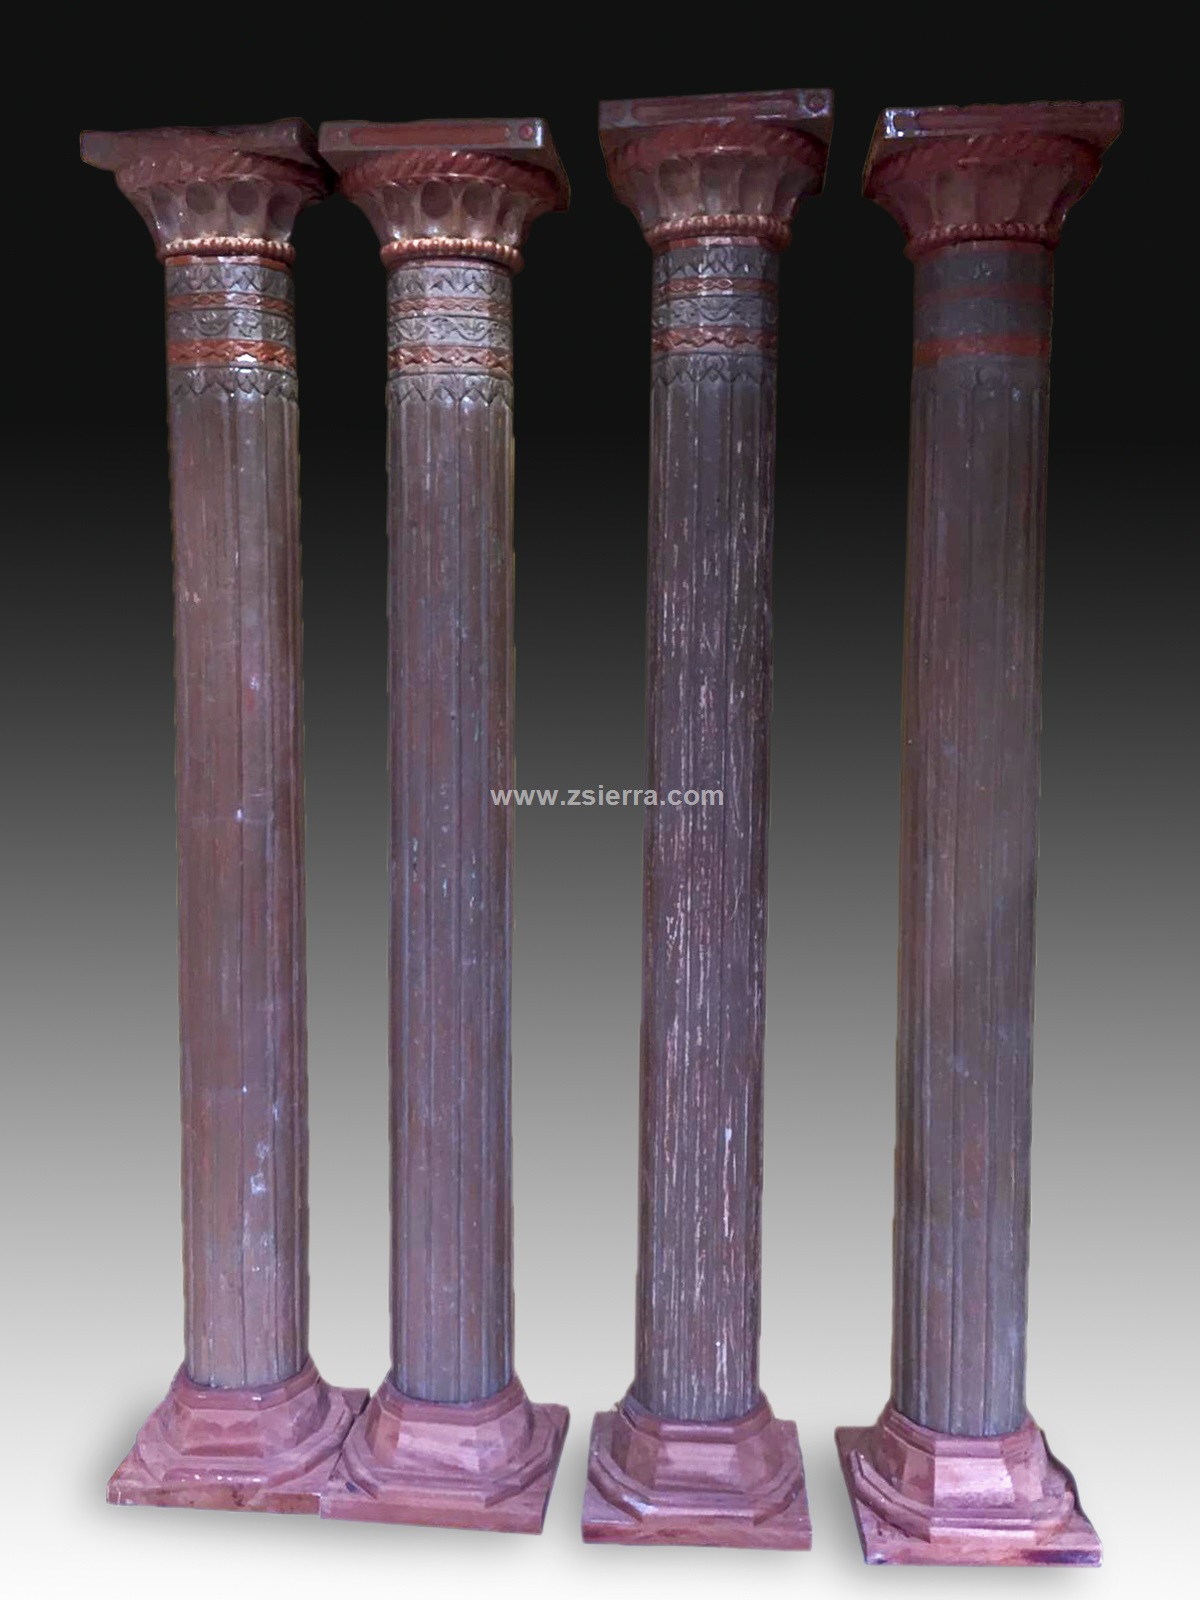 Columna de madera decorativa